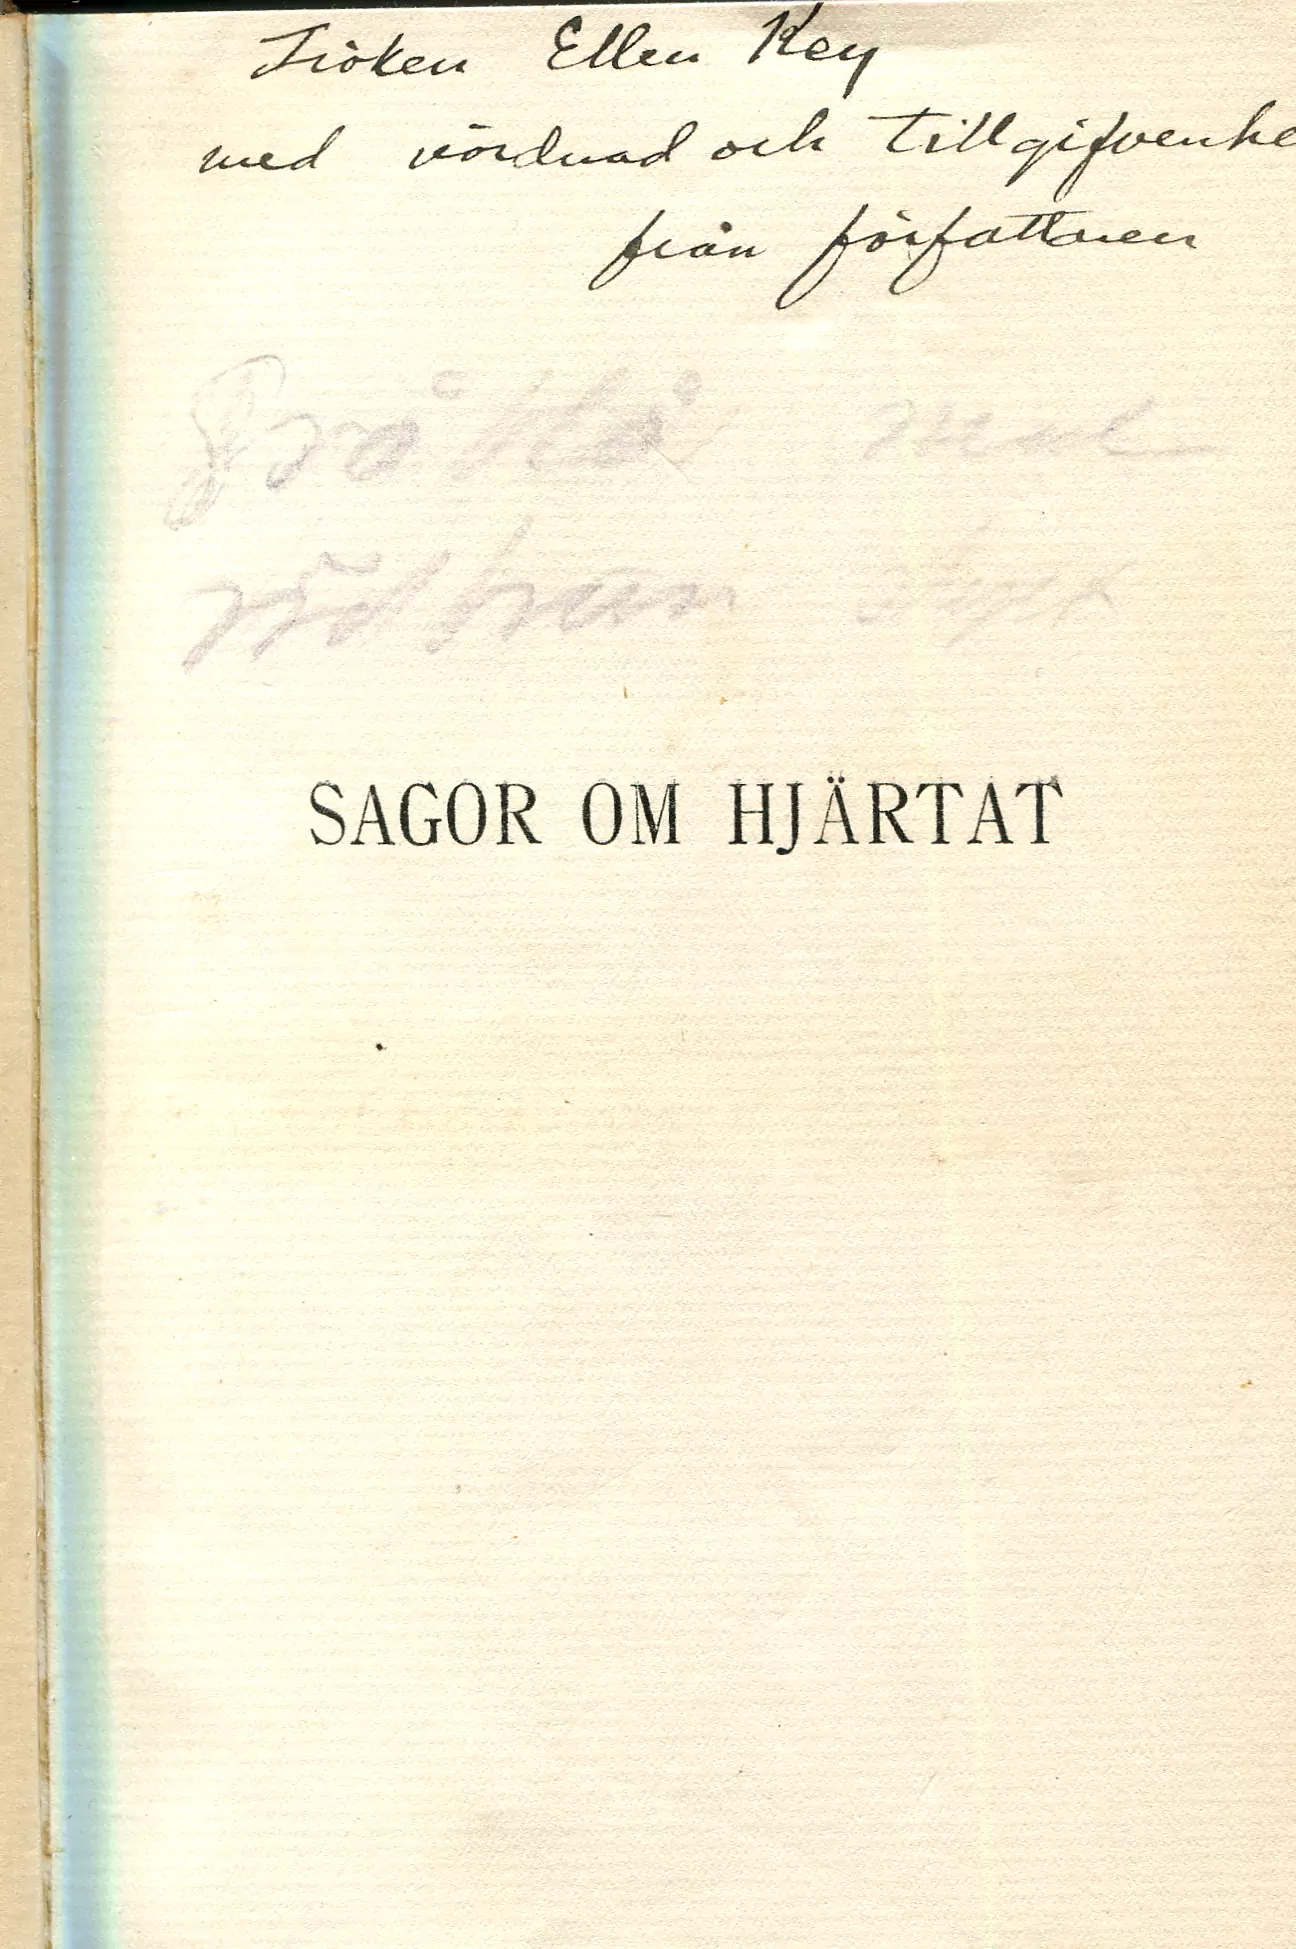 Sagor om hjärtat , Stockholm 1910